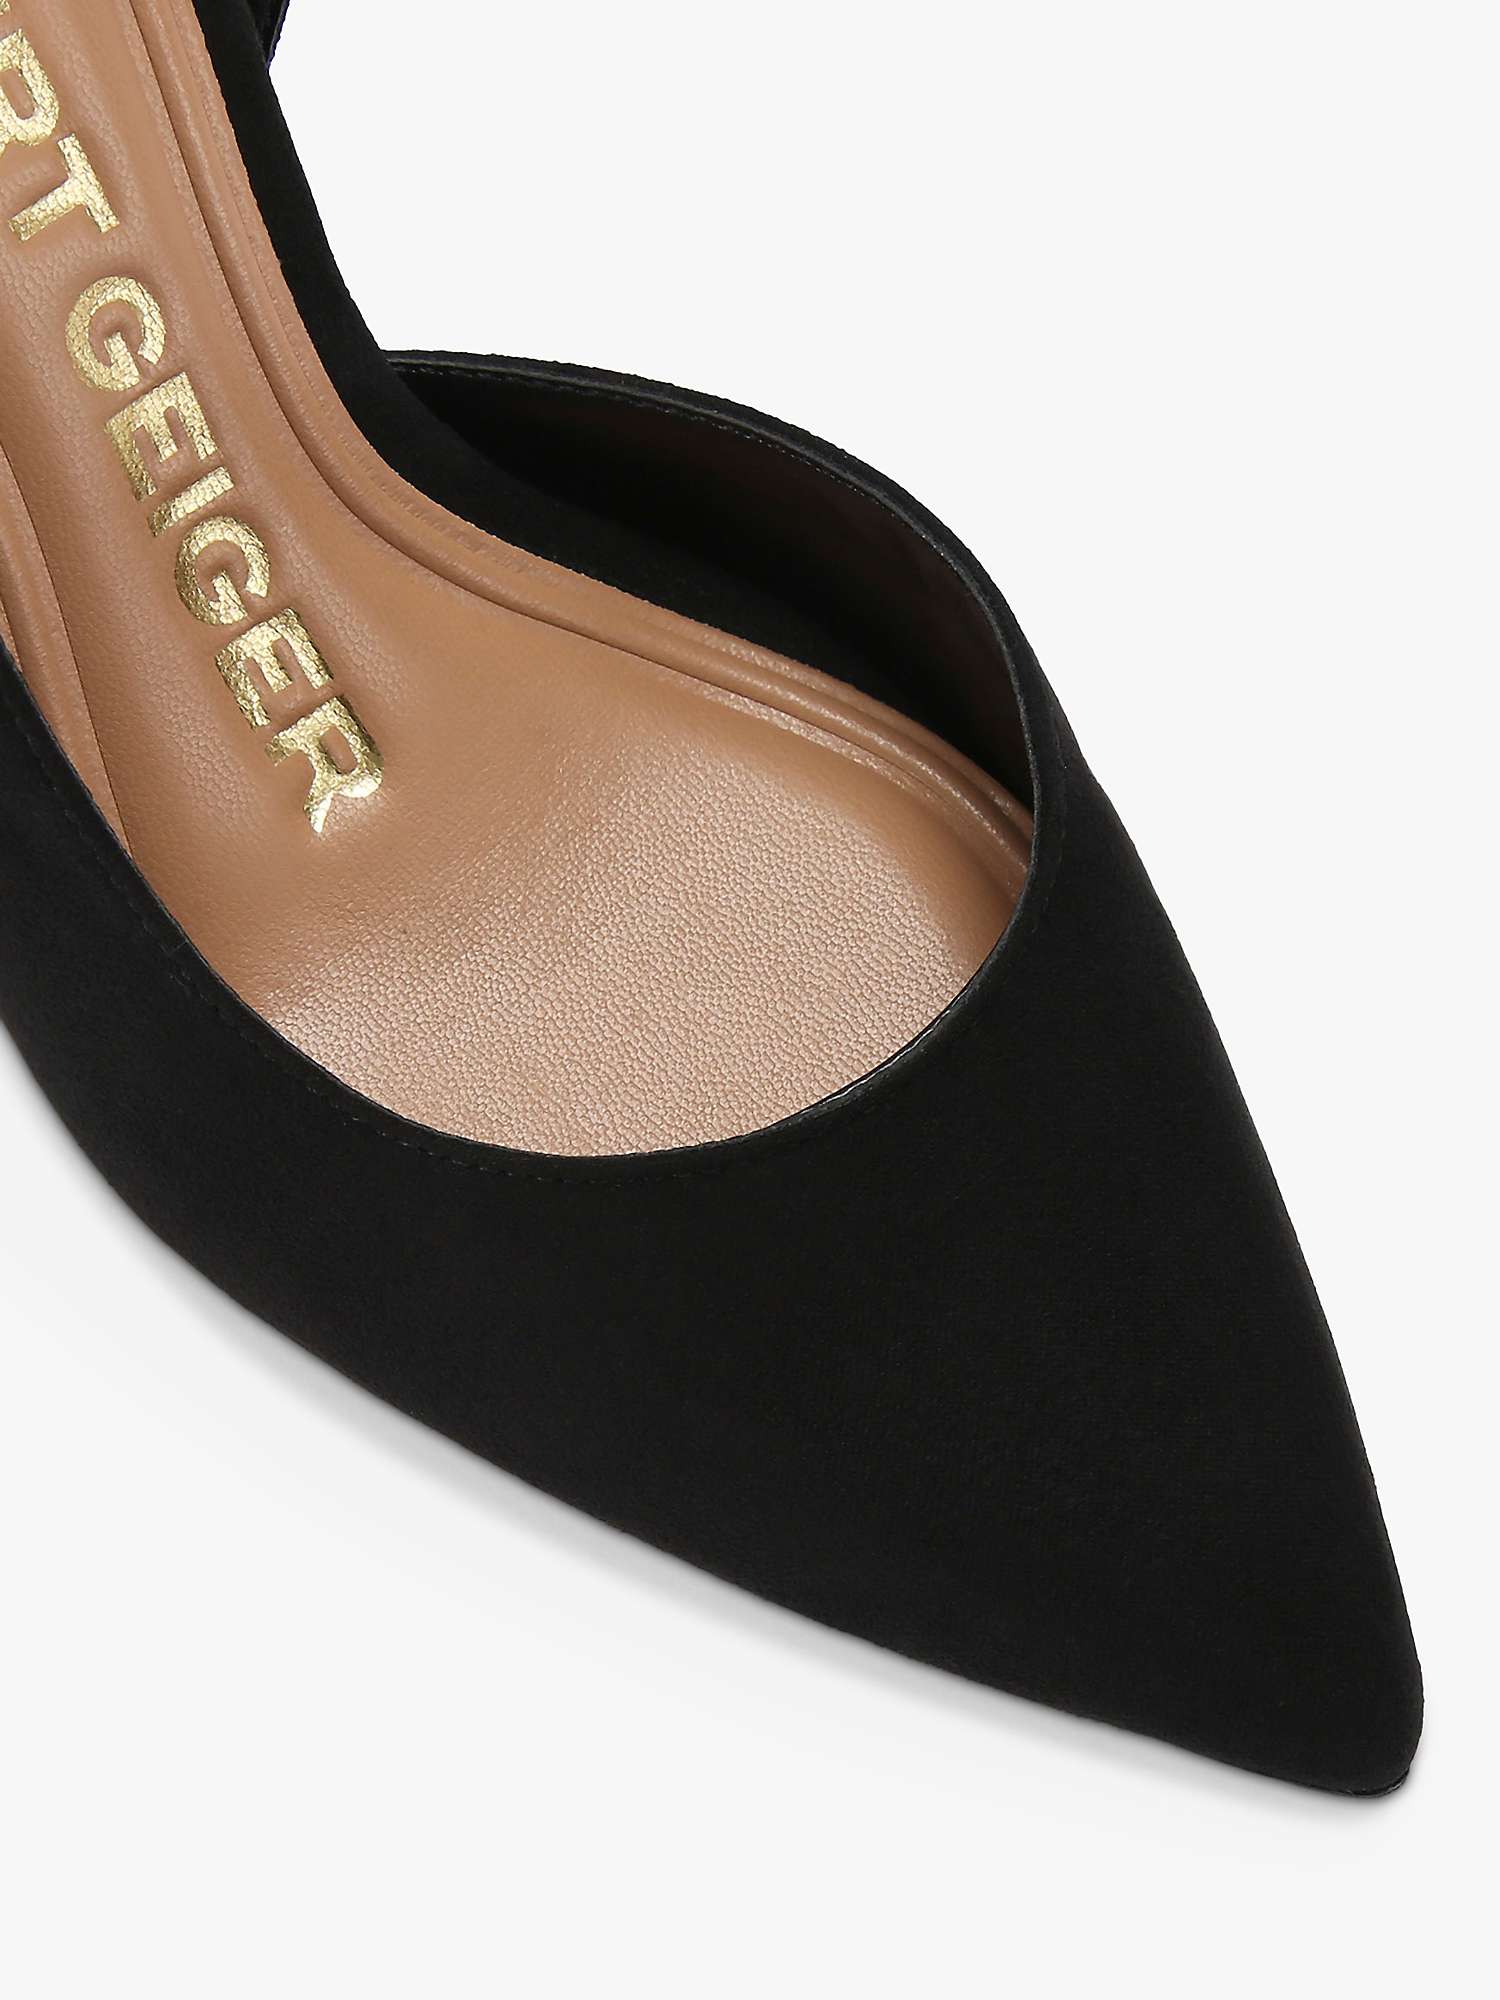 Buy KG Kurt Geiger Aria Suede Court Shoes, Black Online at johnlewis.com